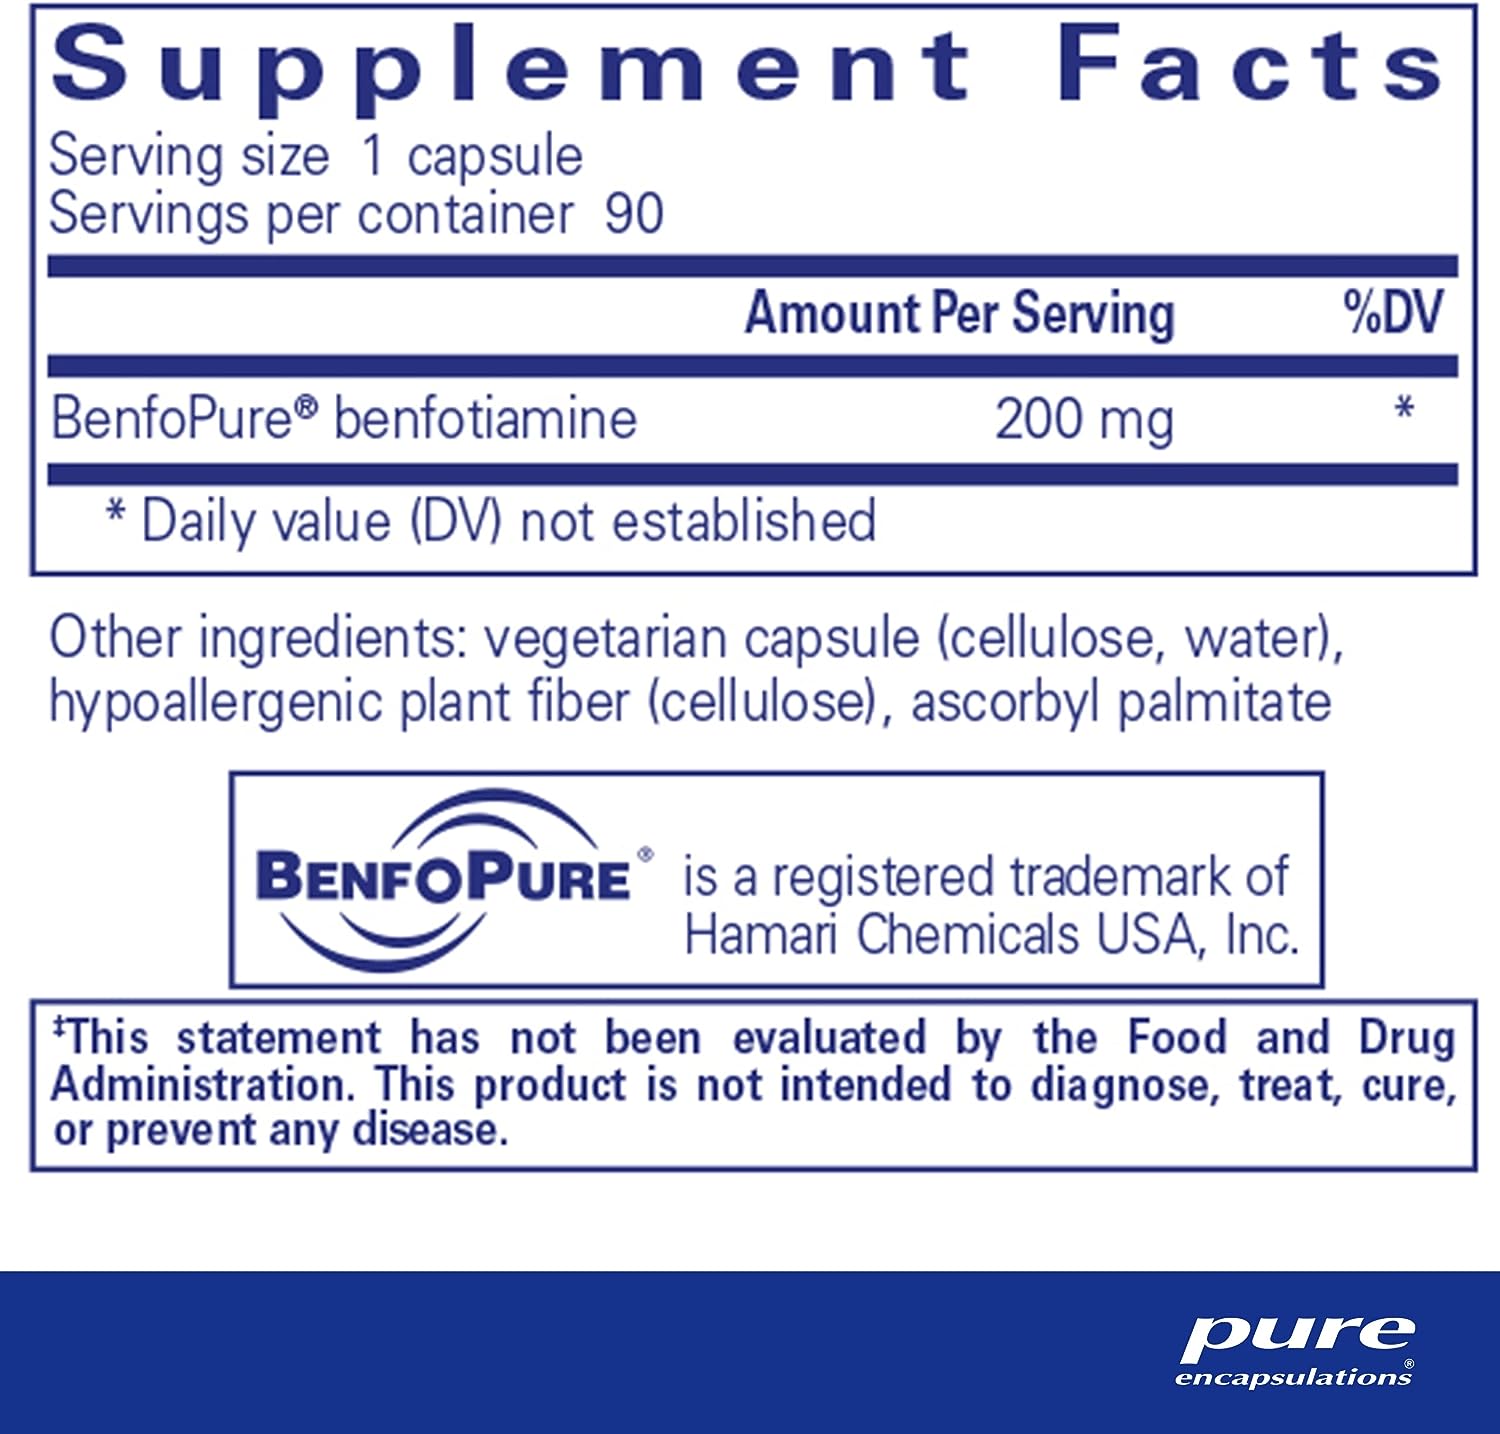 Pure Encapsulations BenfoMax 90s - 200 mg Benfotiamine - Vitamin B1 Thiamin Supplement - Supports Heart  Metabolism Health - Vegan  Non-GMO - 90 Capsules